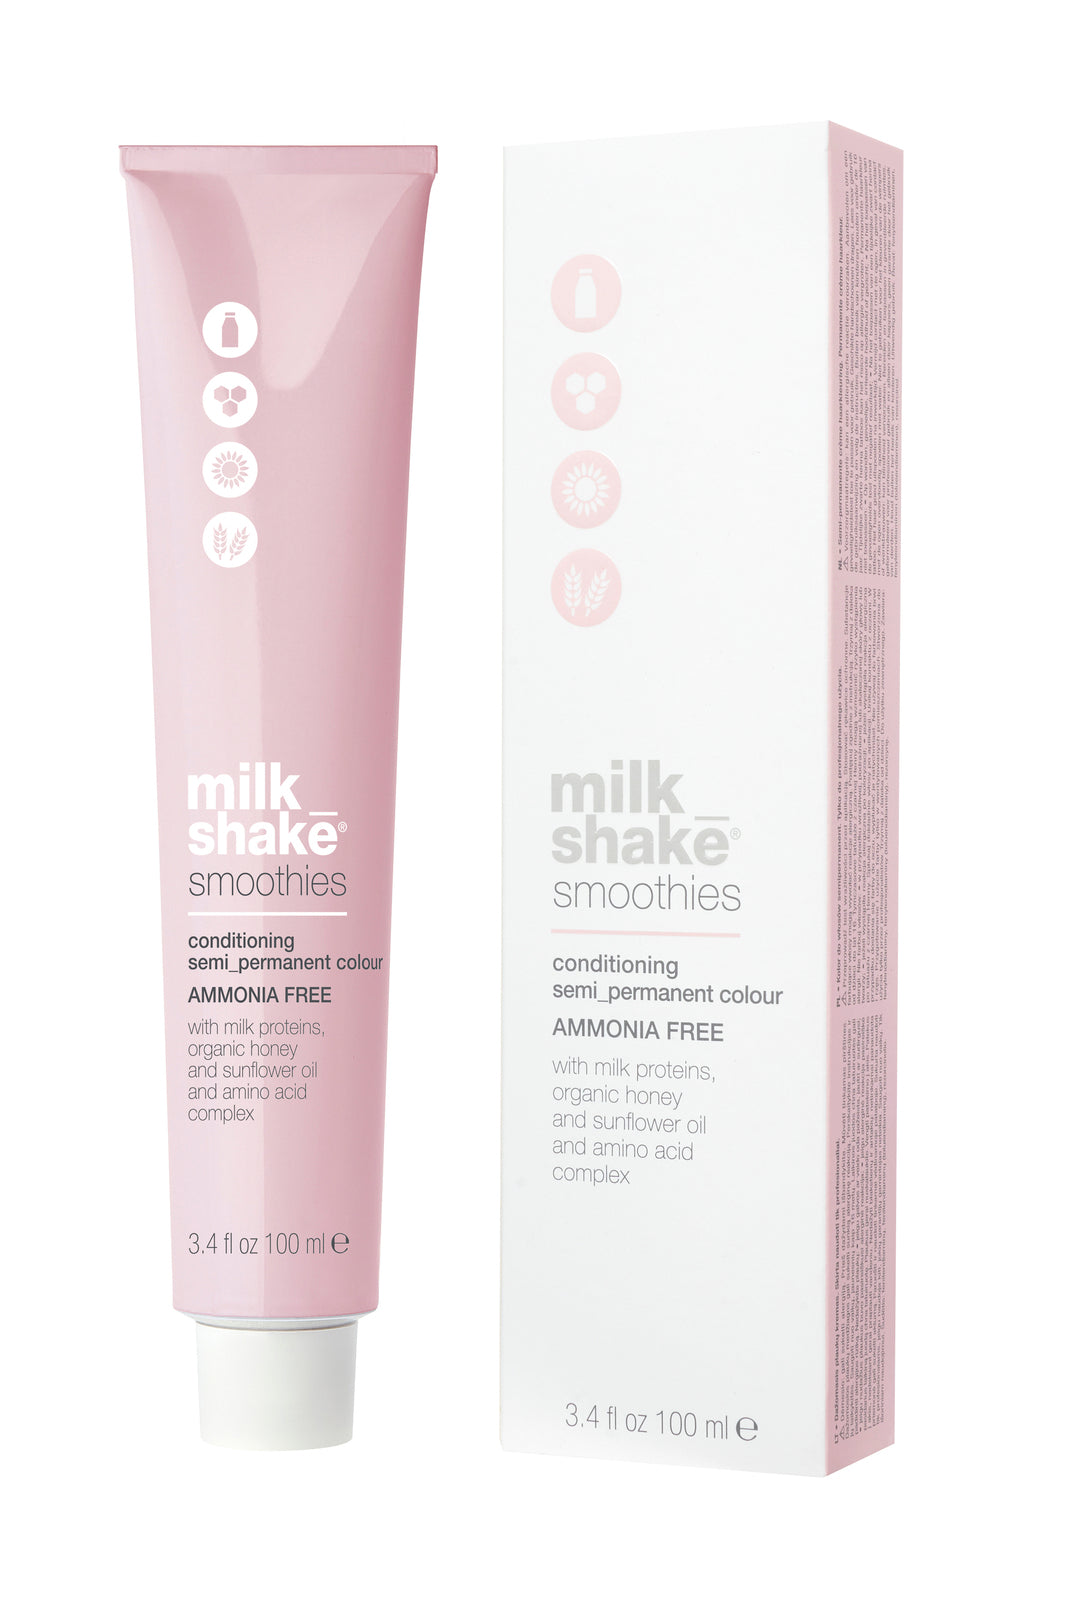 Milkshake smoothies semi-permanent color 6.13